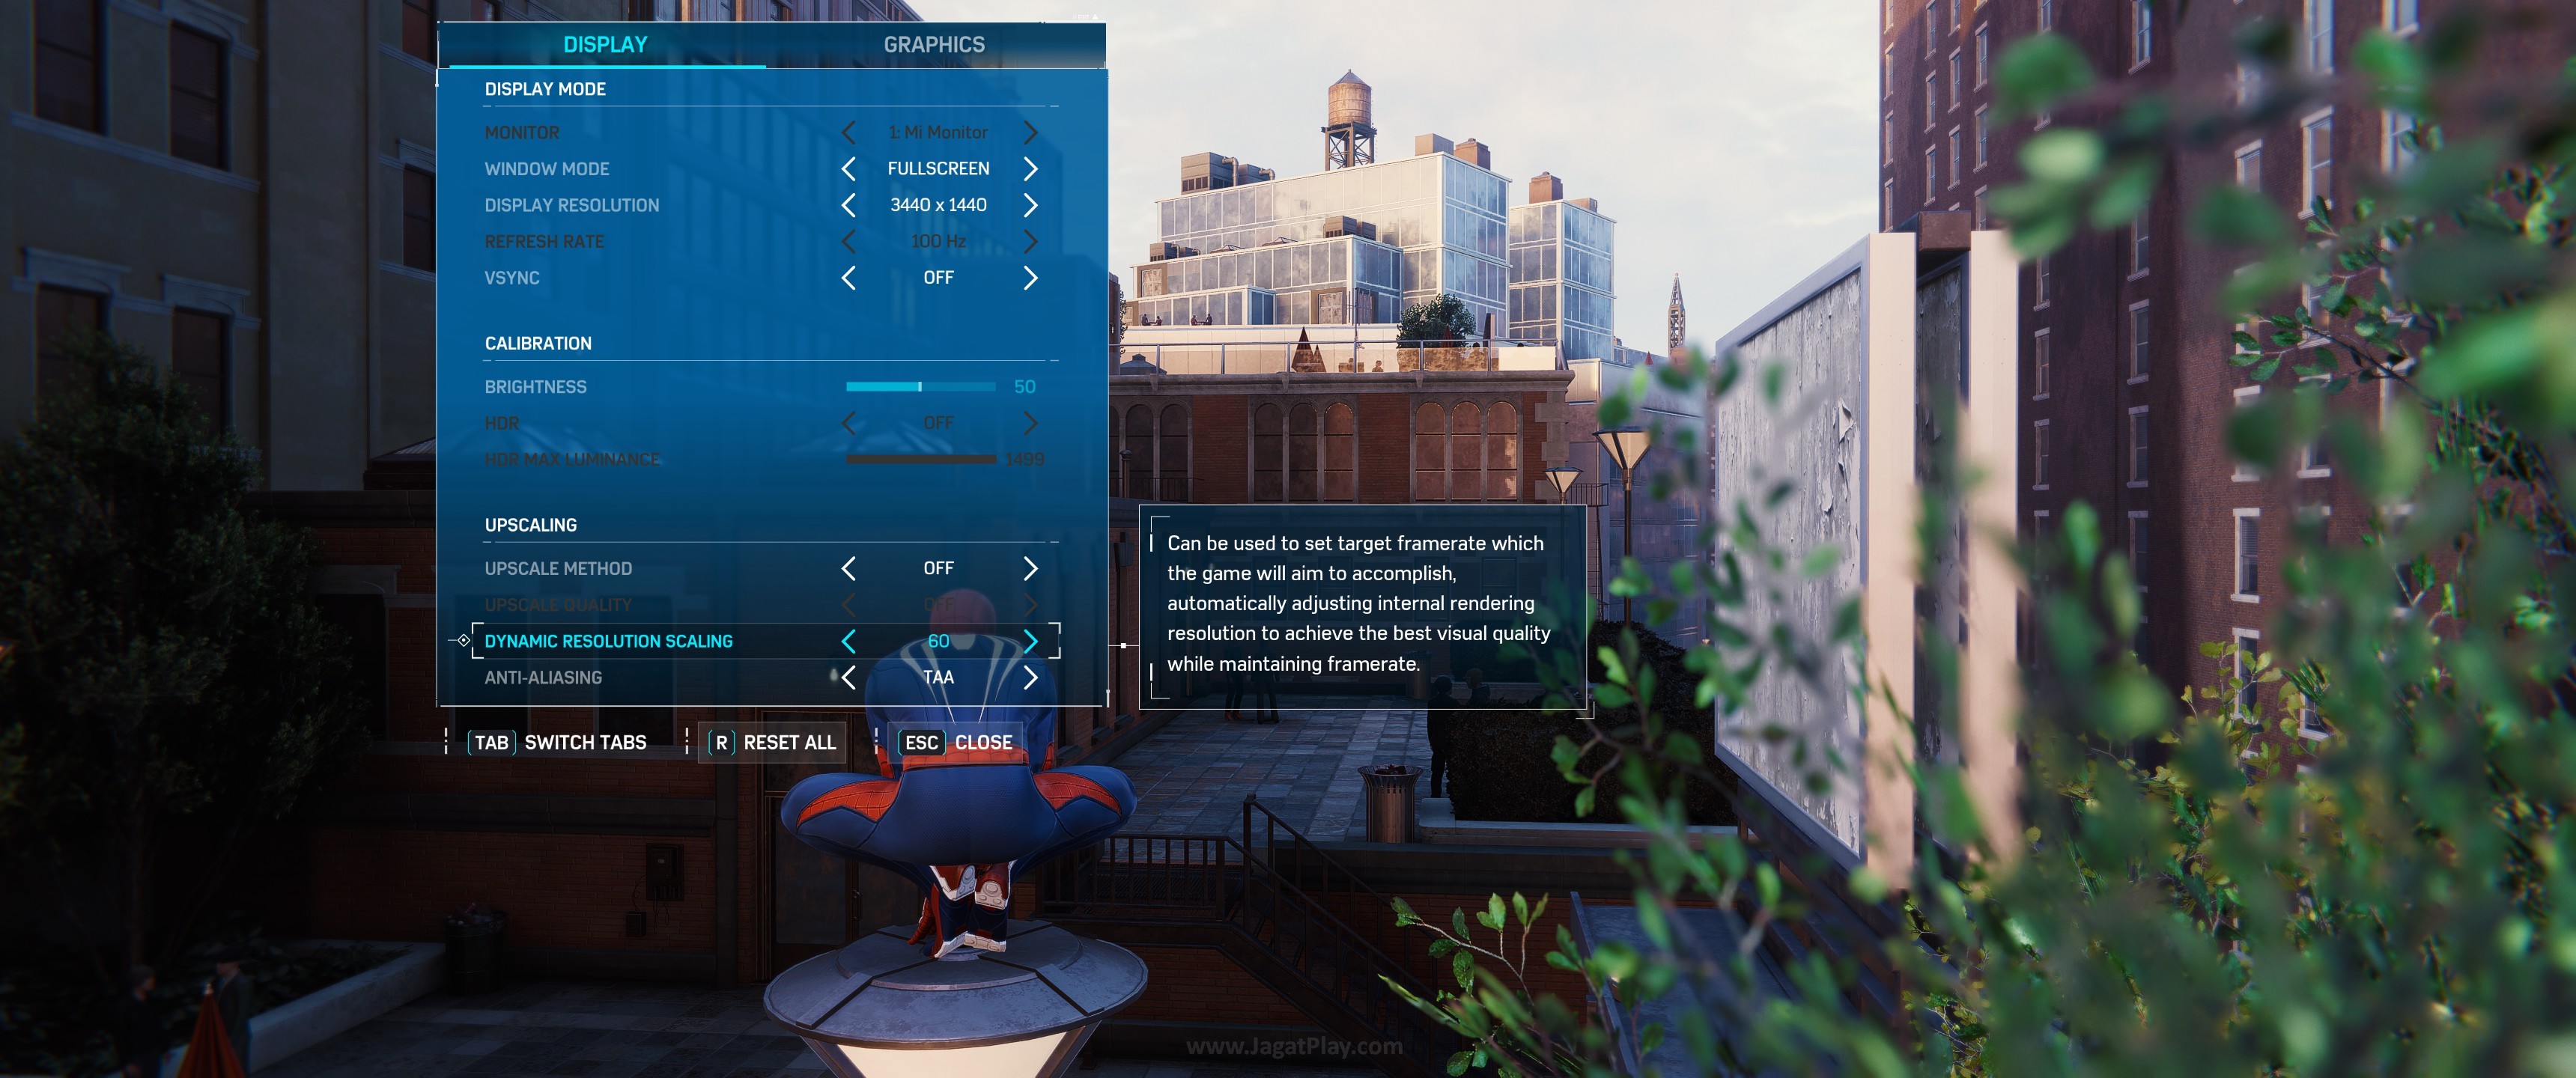 Spiderman PC menu jagatplay 1